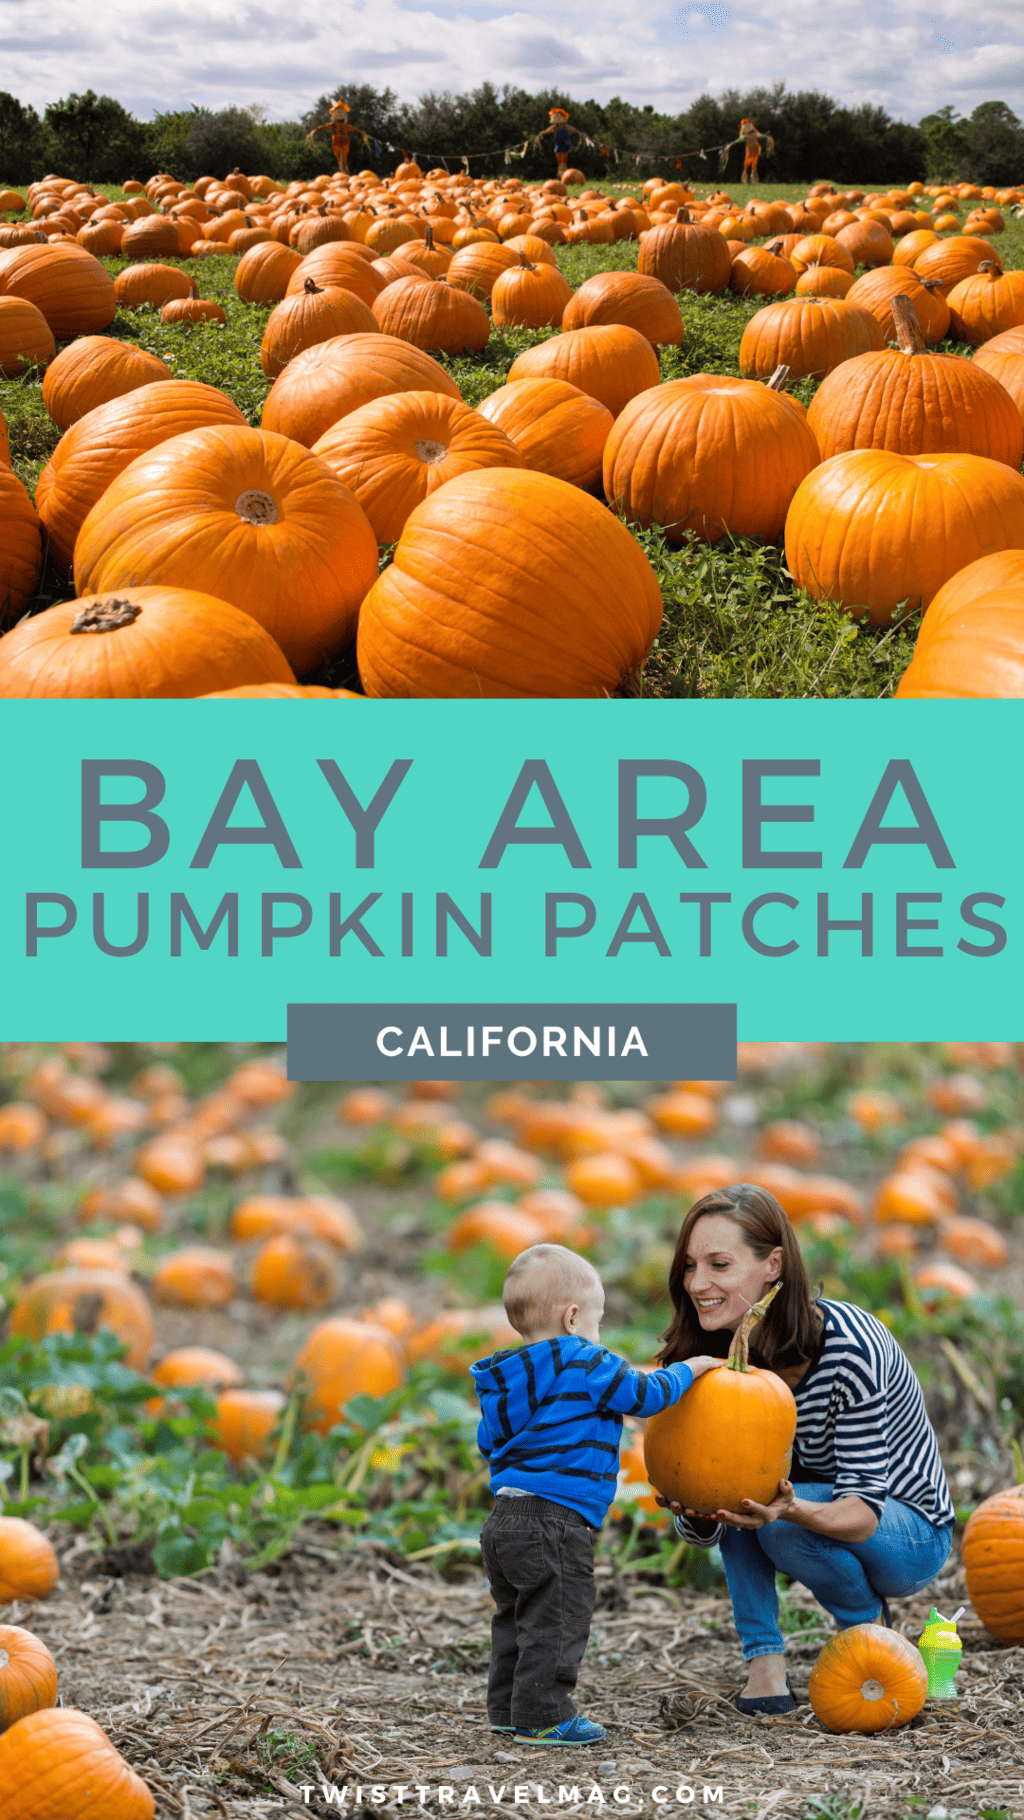 San Francisco Bay Area Pumpkin Patches - credit Keryn Means of Twist Travel Magazine